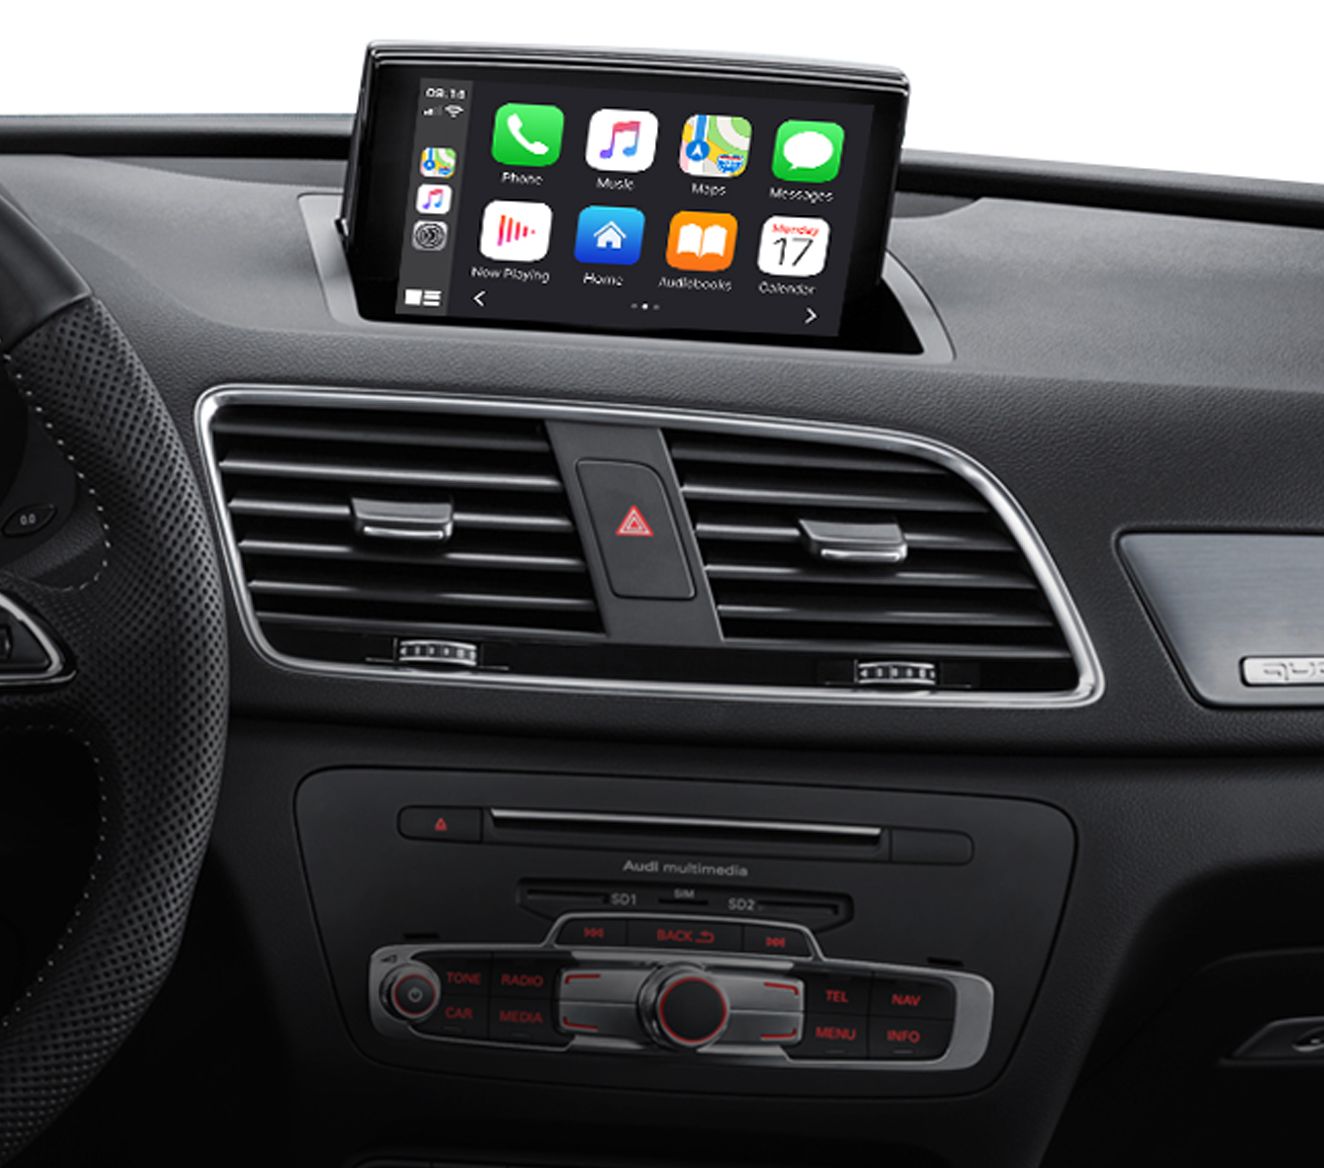 Audi A1 Apple Carplay / Android Auto Add-On Module - Auto Tech Systems